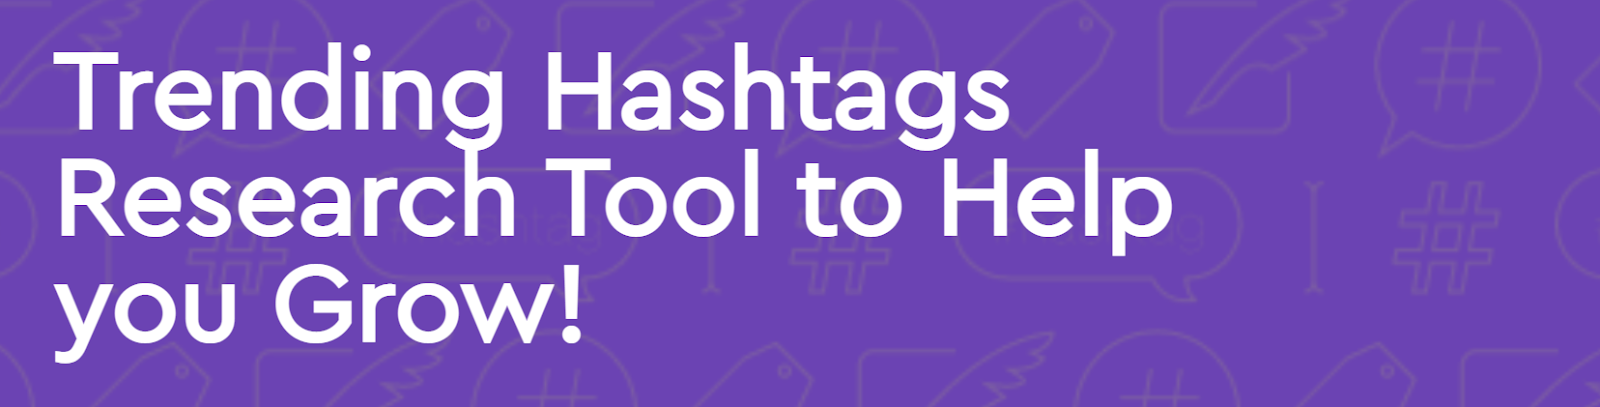 Using Hashtags Effectively with Max Thompson of HashTagsForLikes